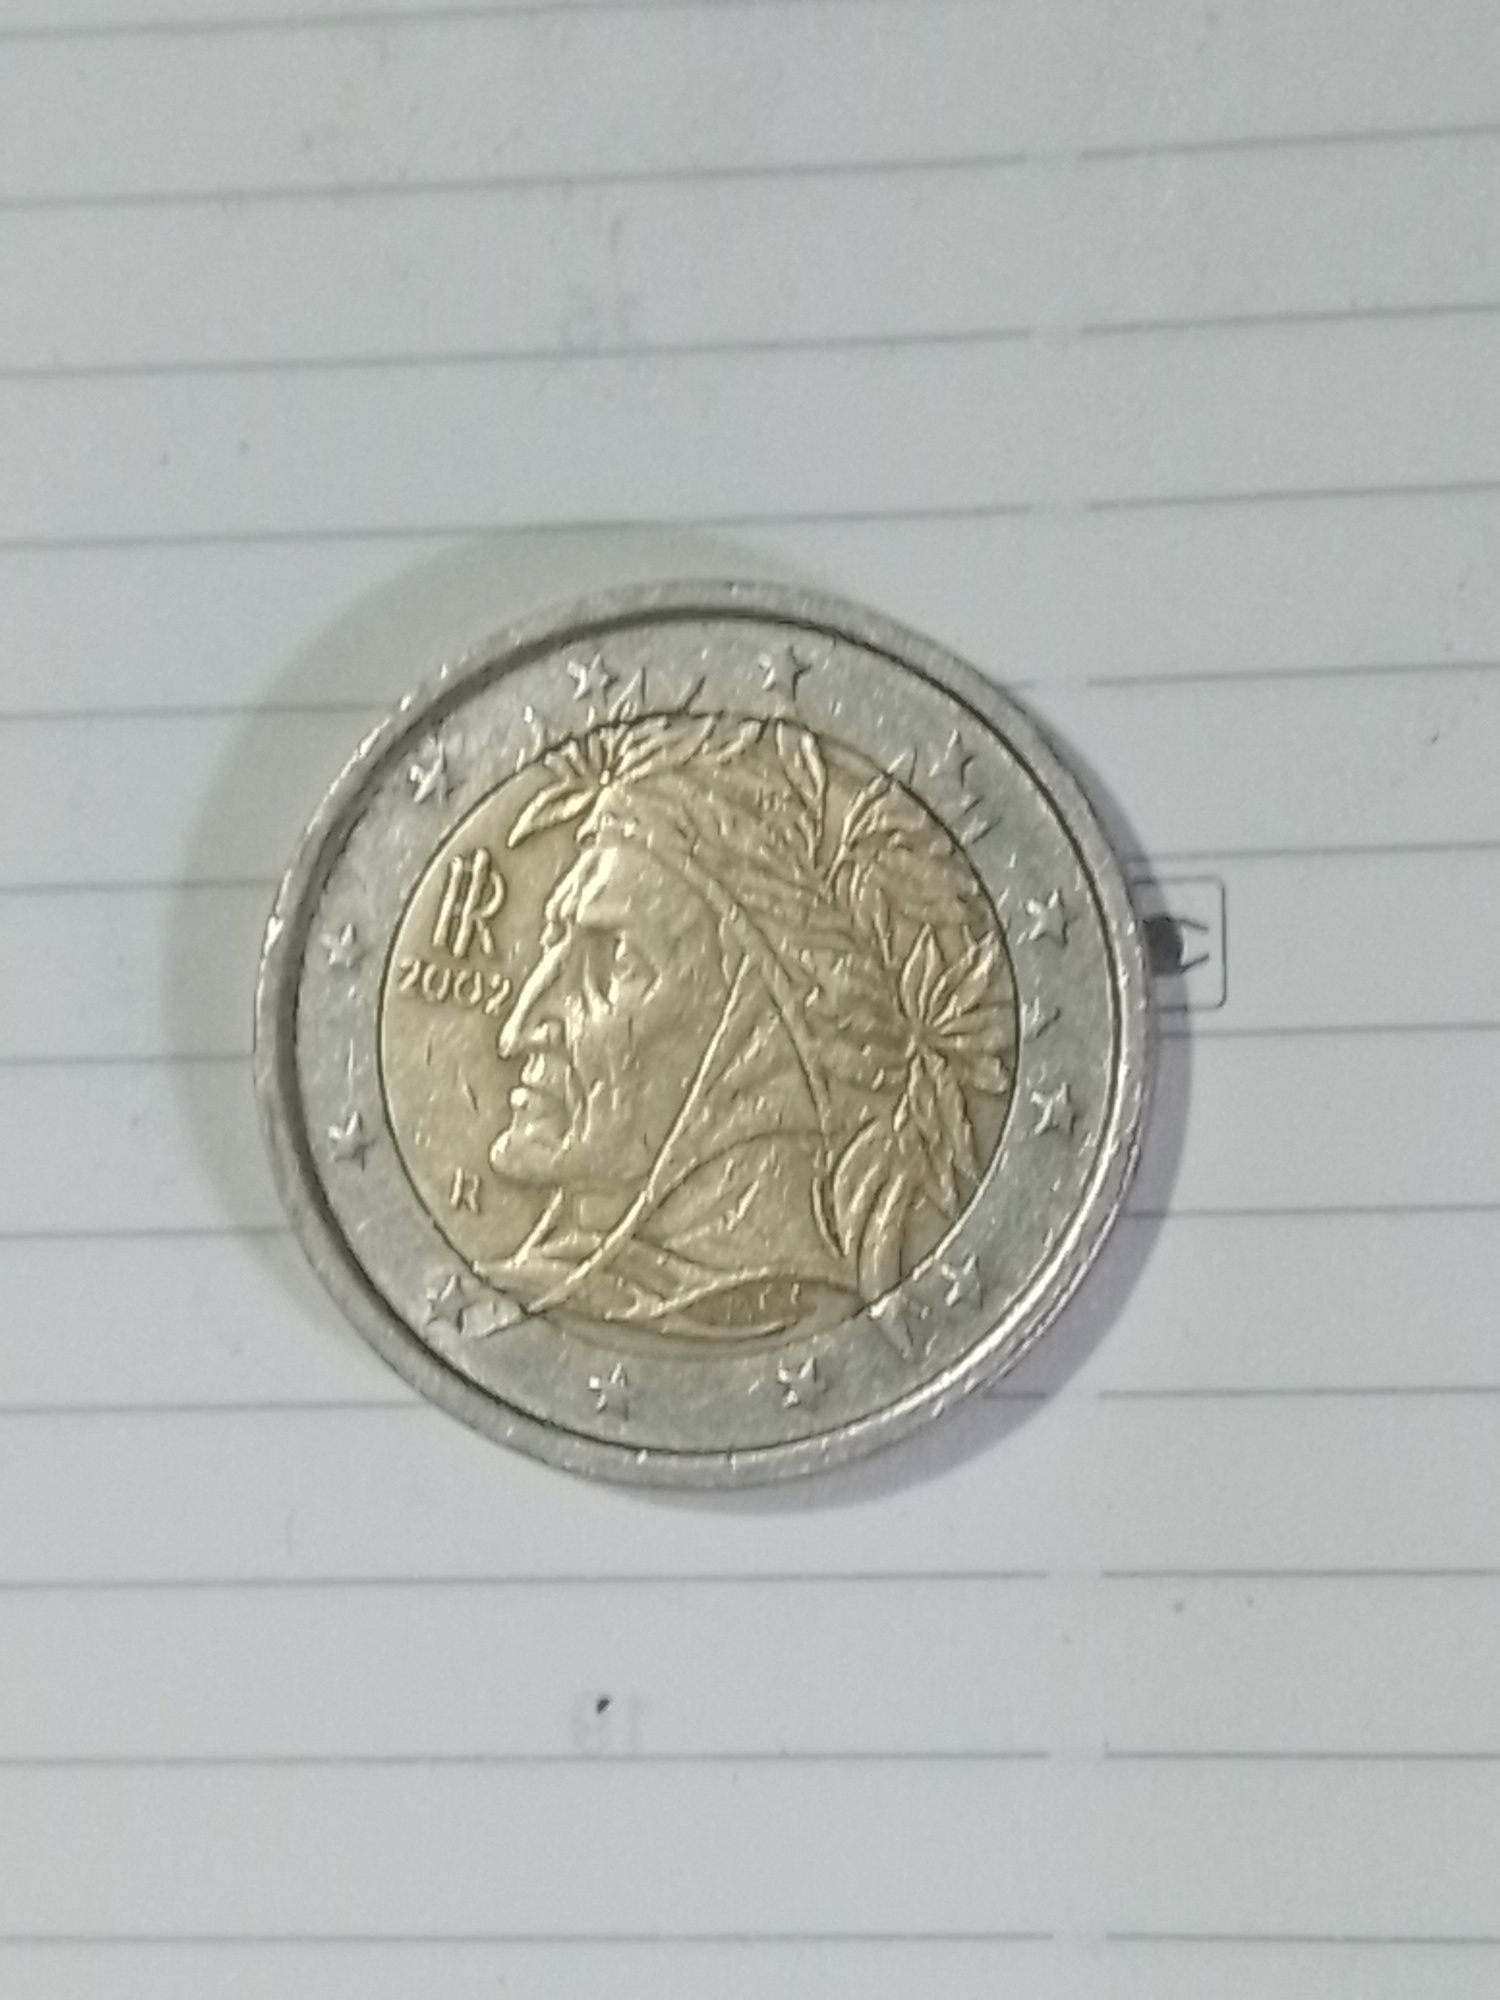 Ofer monede euro vechi din anii 2002